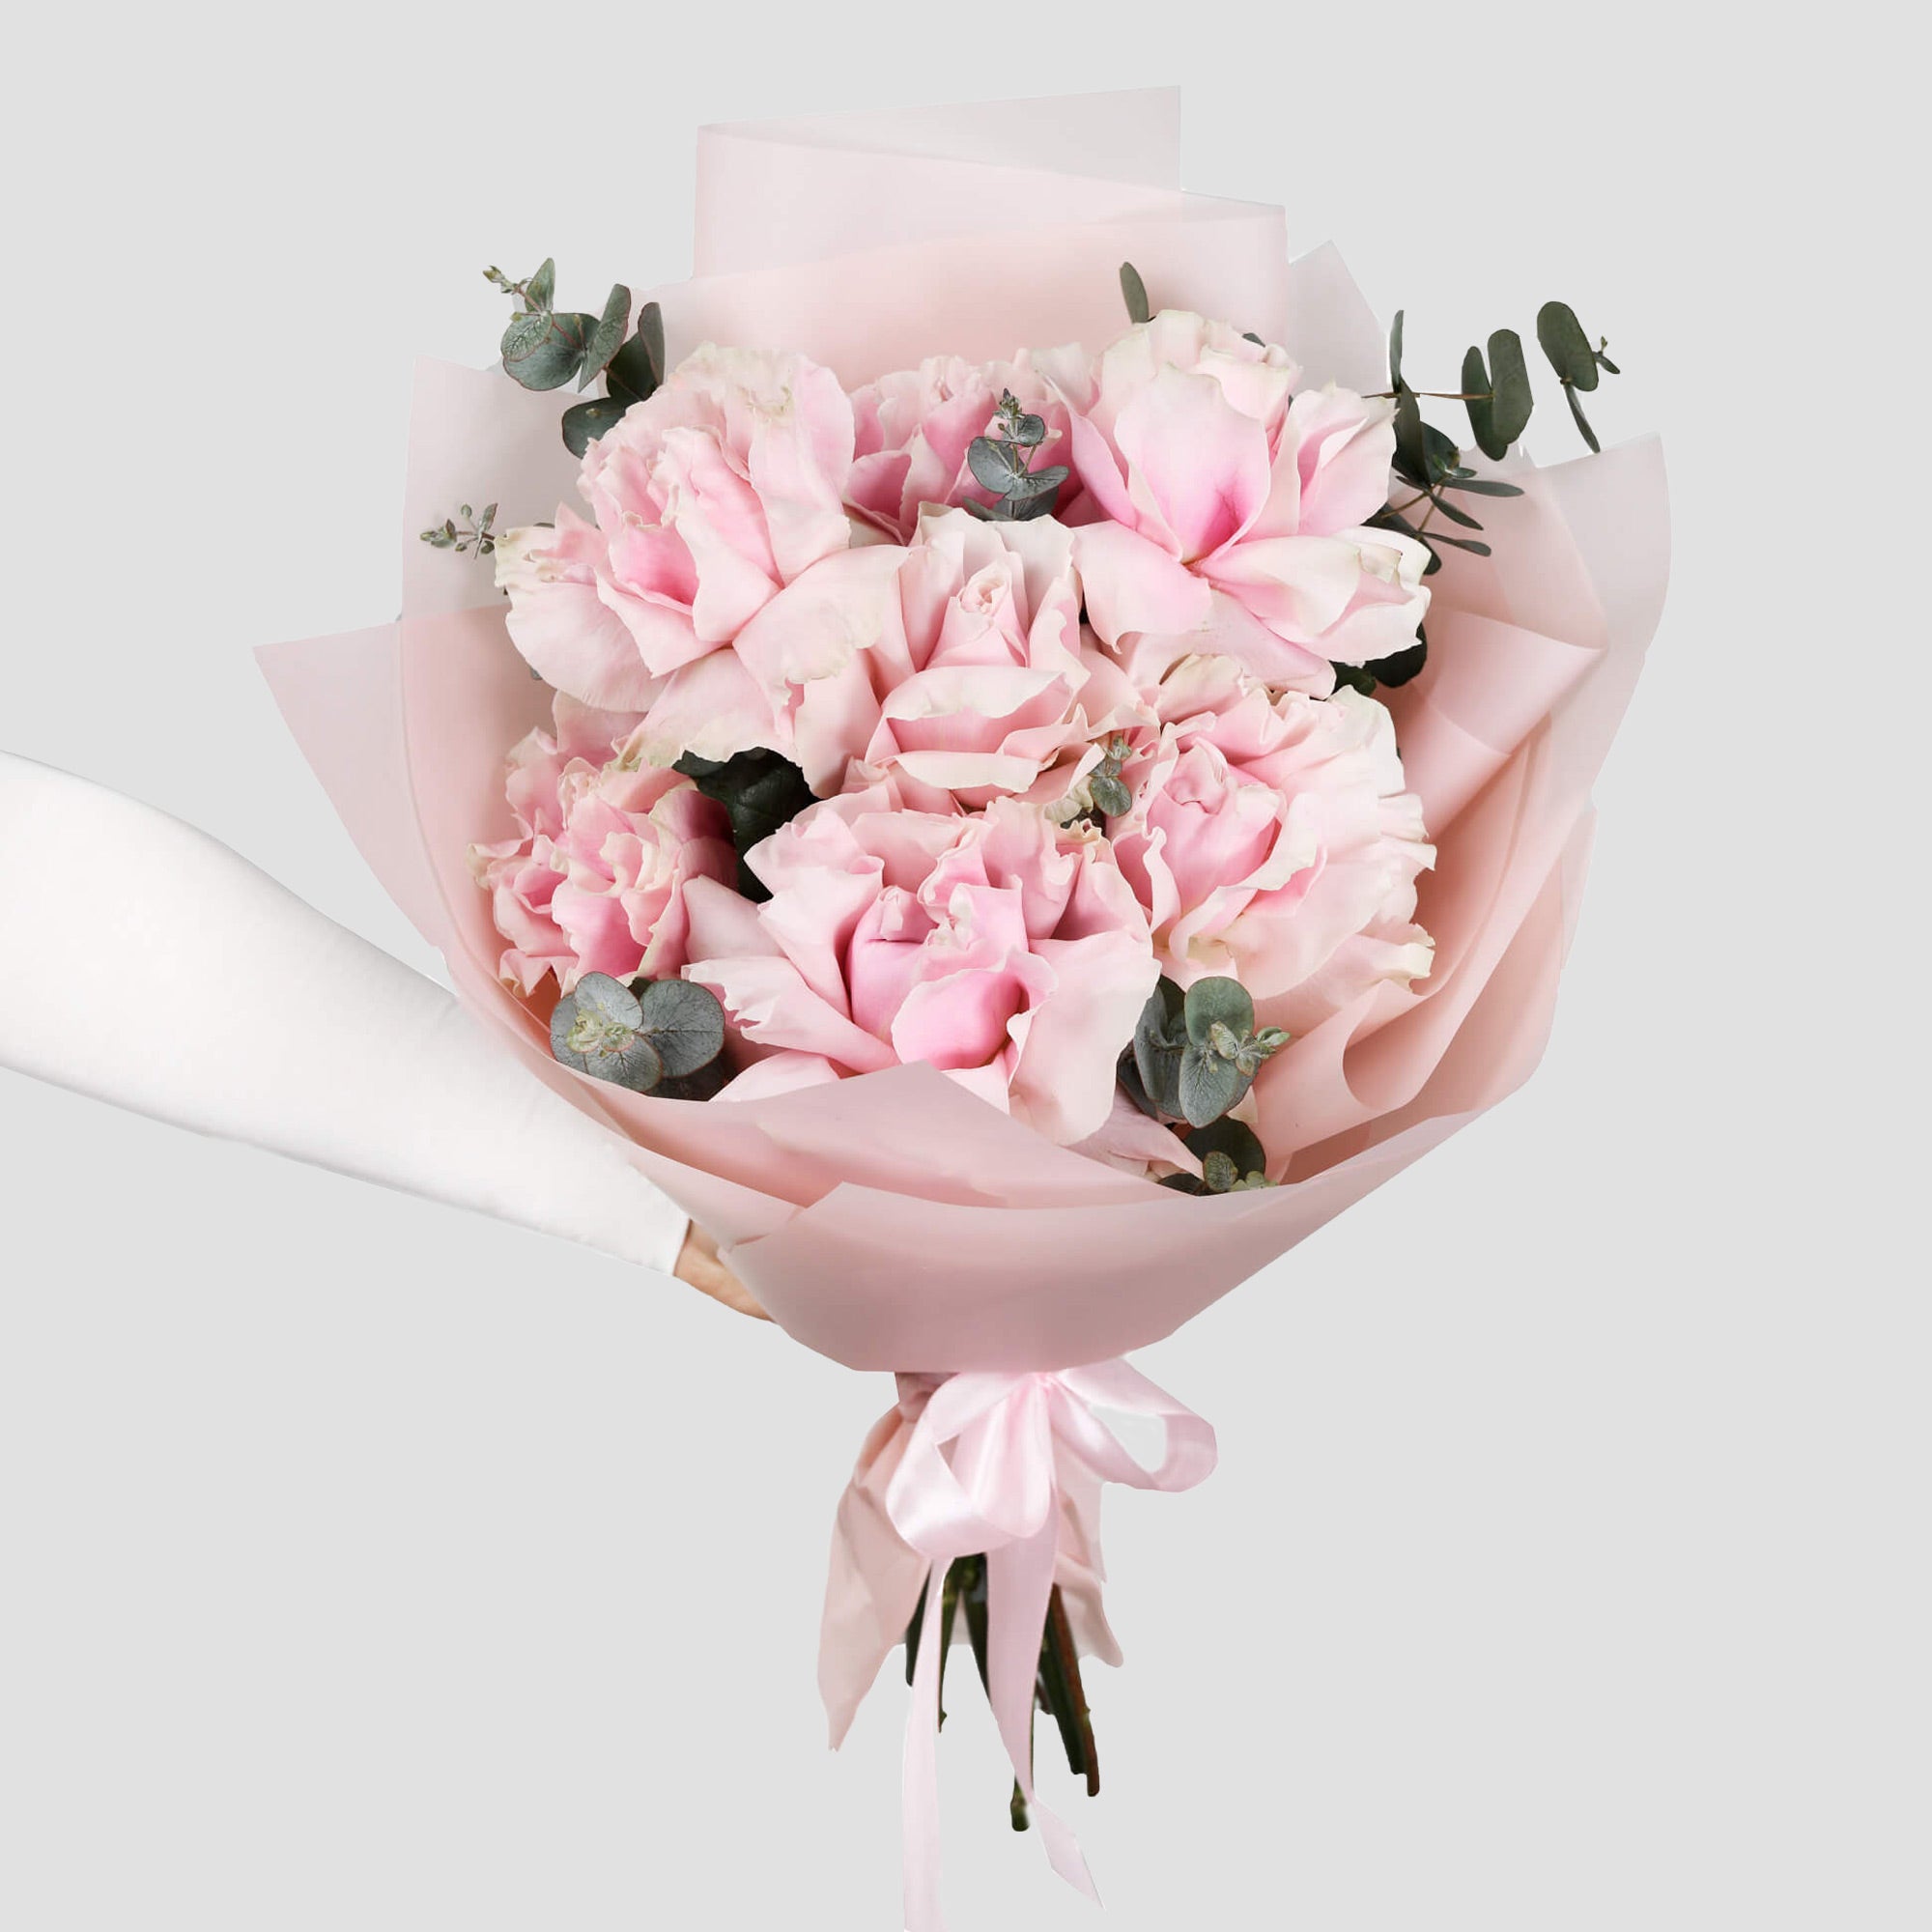 Buchet cu 7 trandafiri roz speciali si eucalipt, 1